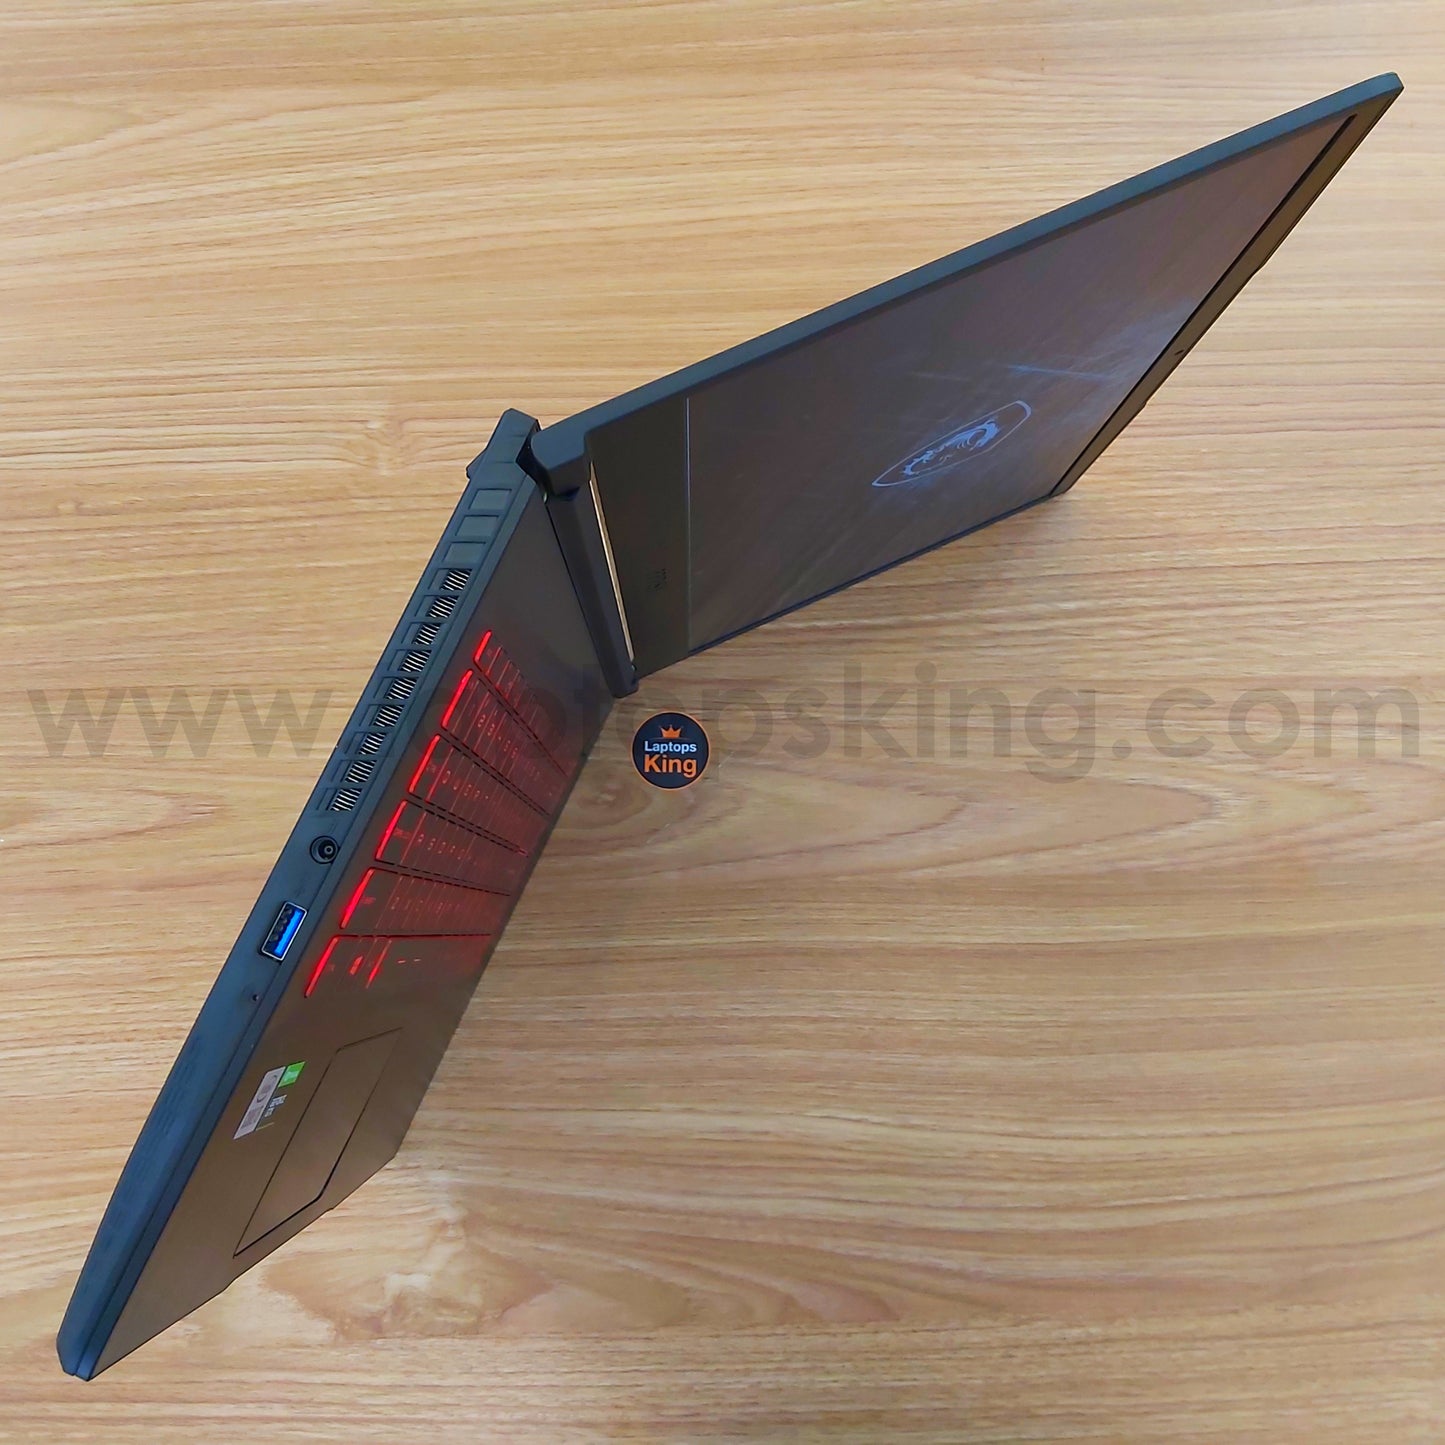 MSI Gf63 Thin 10sc i5 10Th Gen GTX 1650 Gaming Laptop Offers (New Open Box)